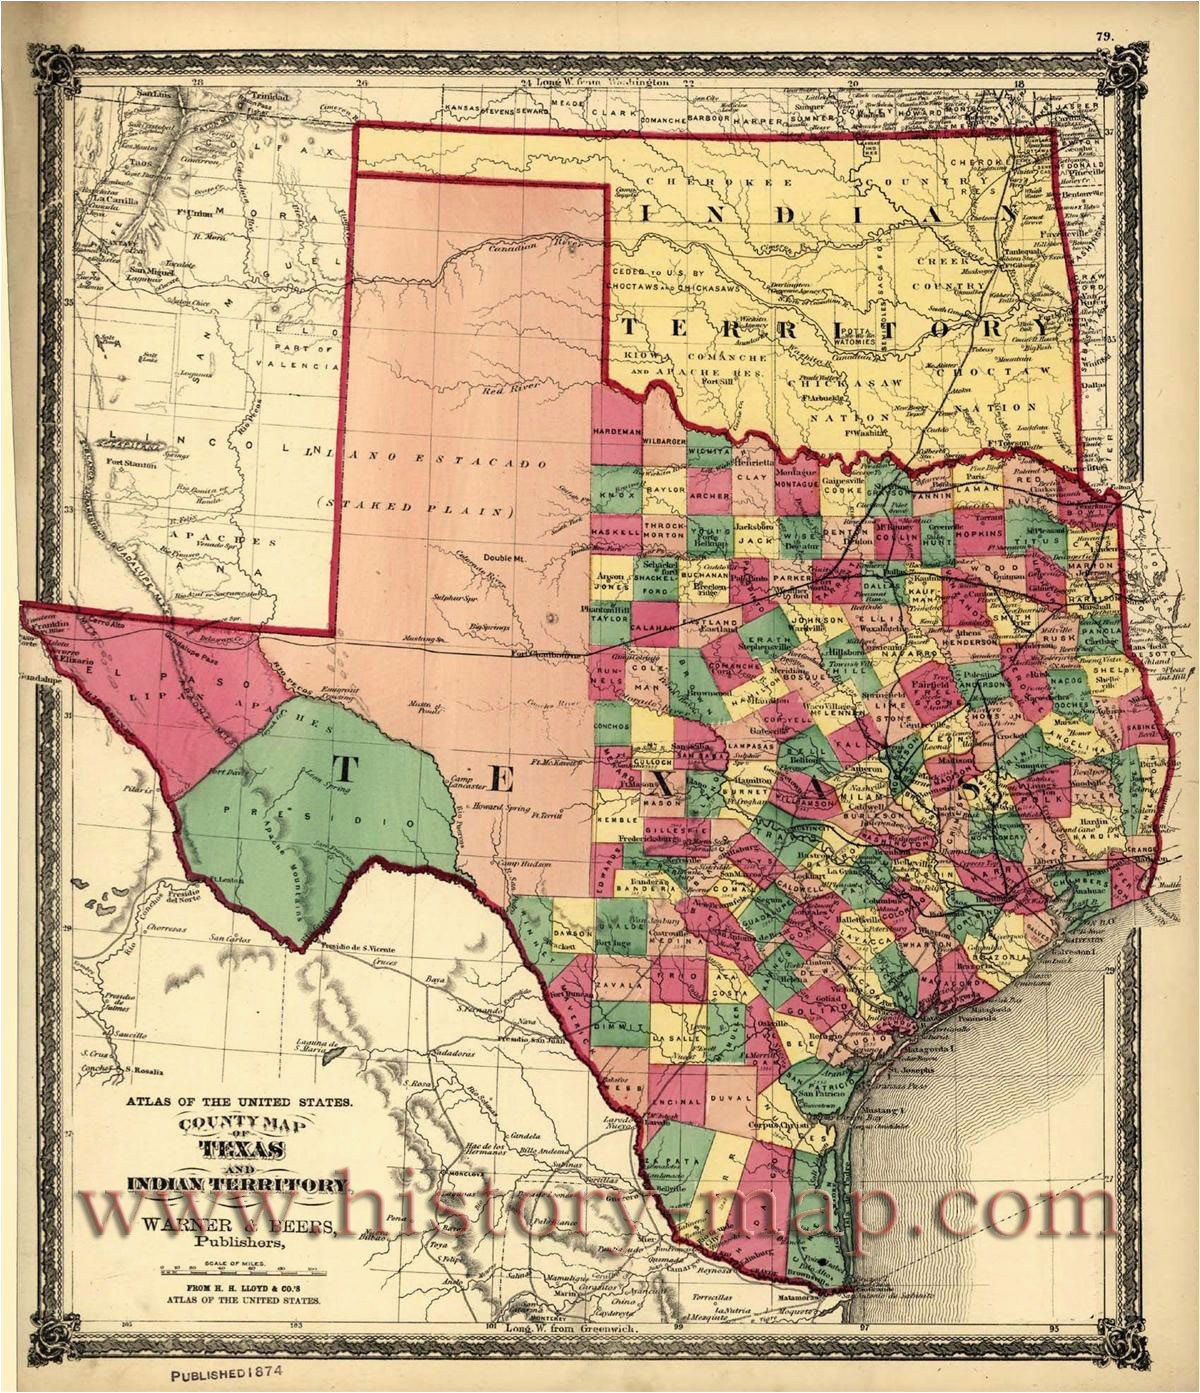 Midlothian Texas Map Texas Indian Territory Map Business Ideas 2013